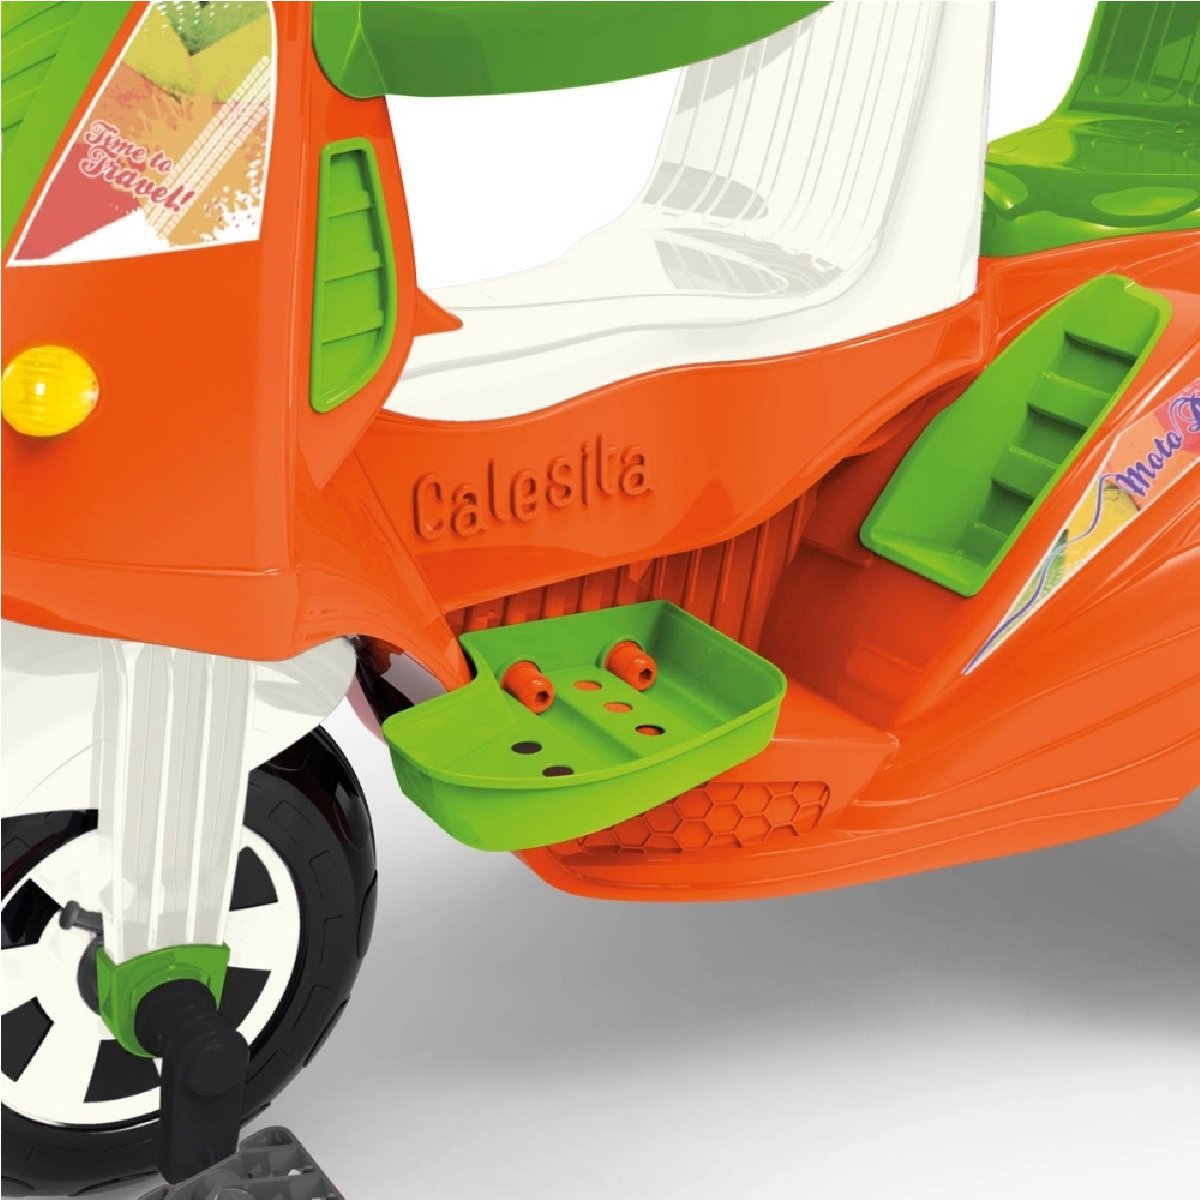 Moto Duo de Passeio e Pedal Triciclo 2 Lugares Calesita 1037 - 5